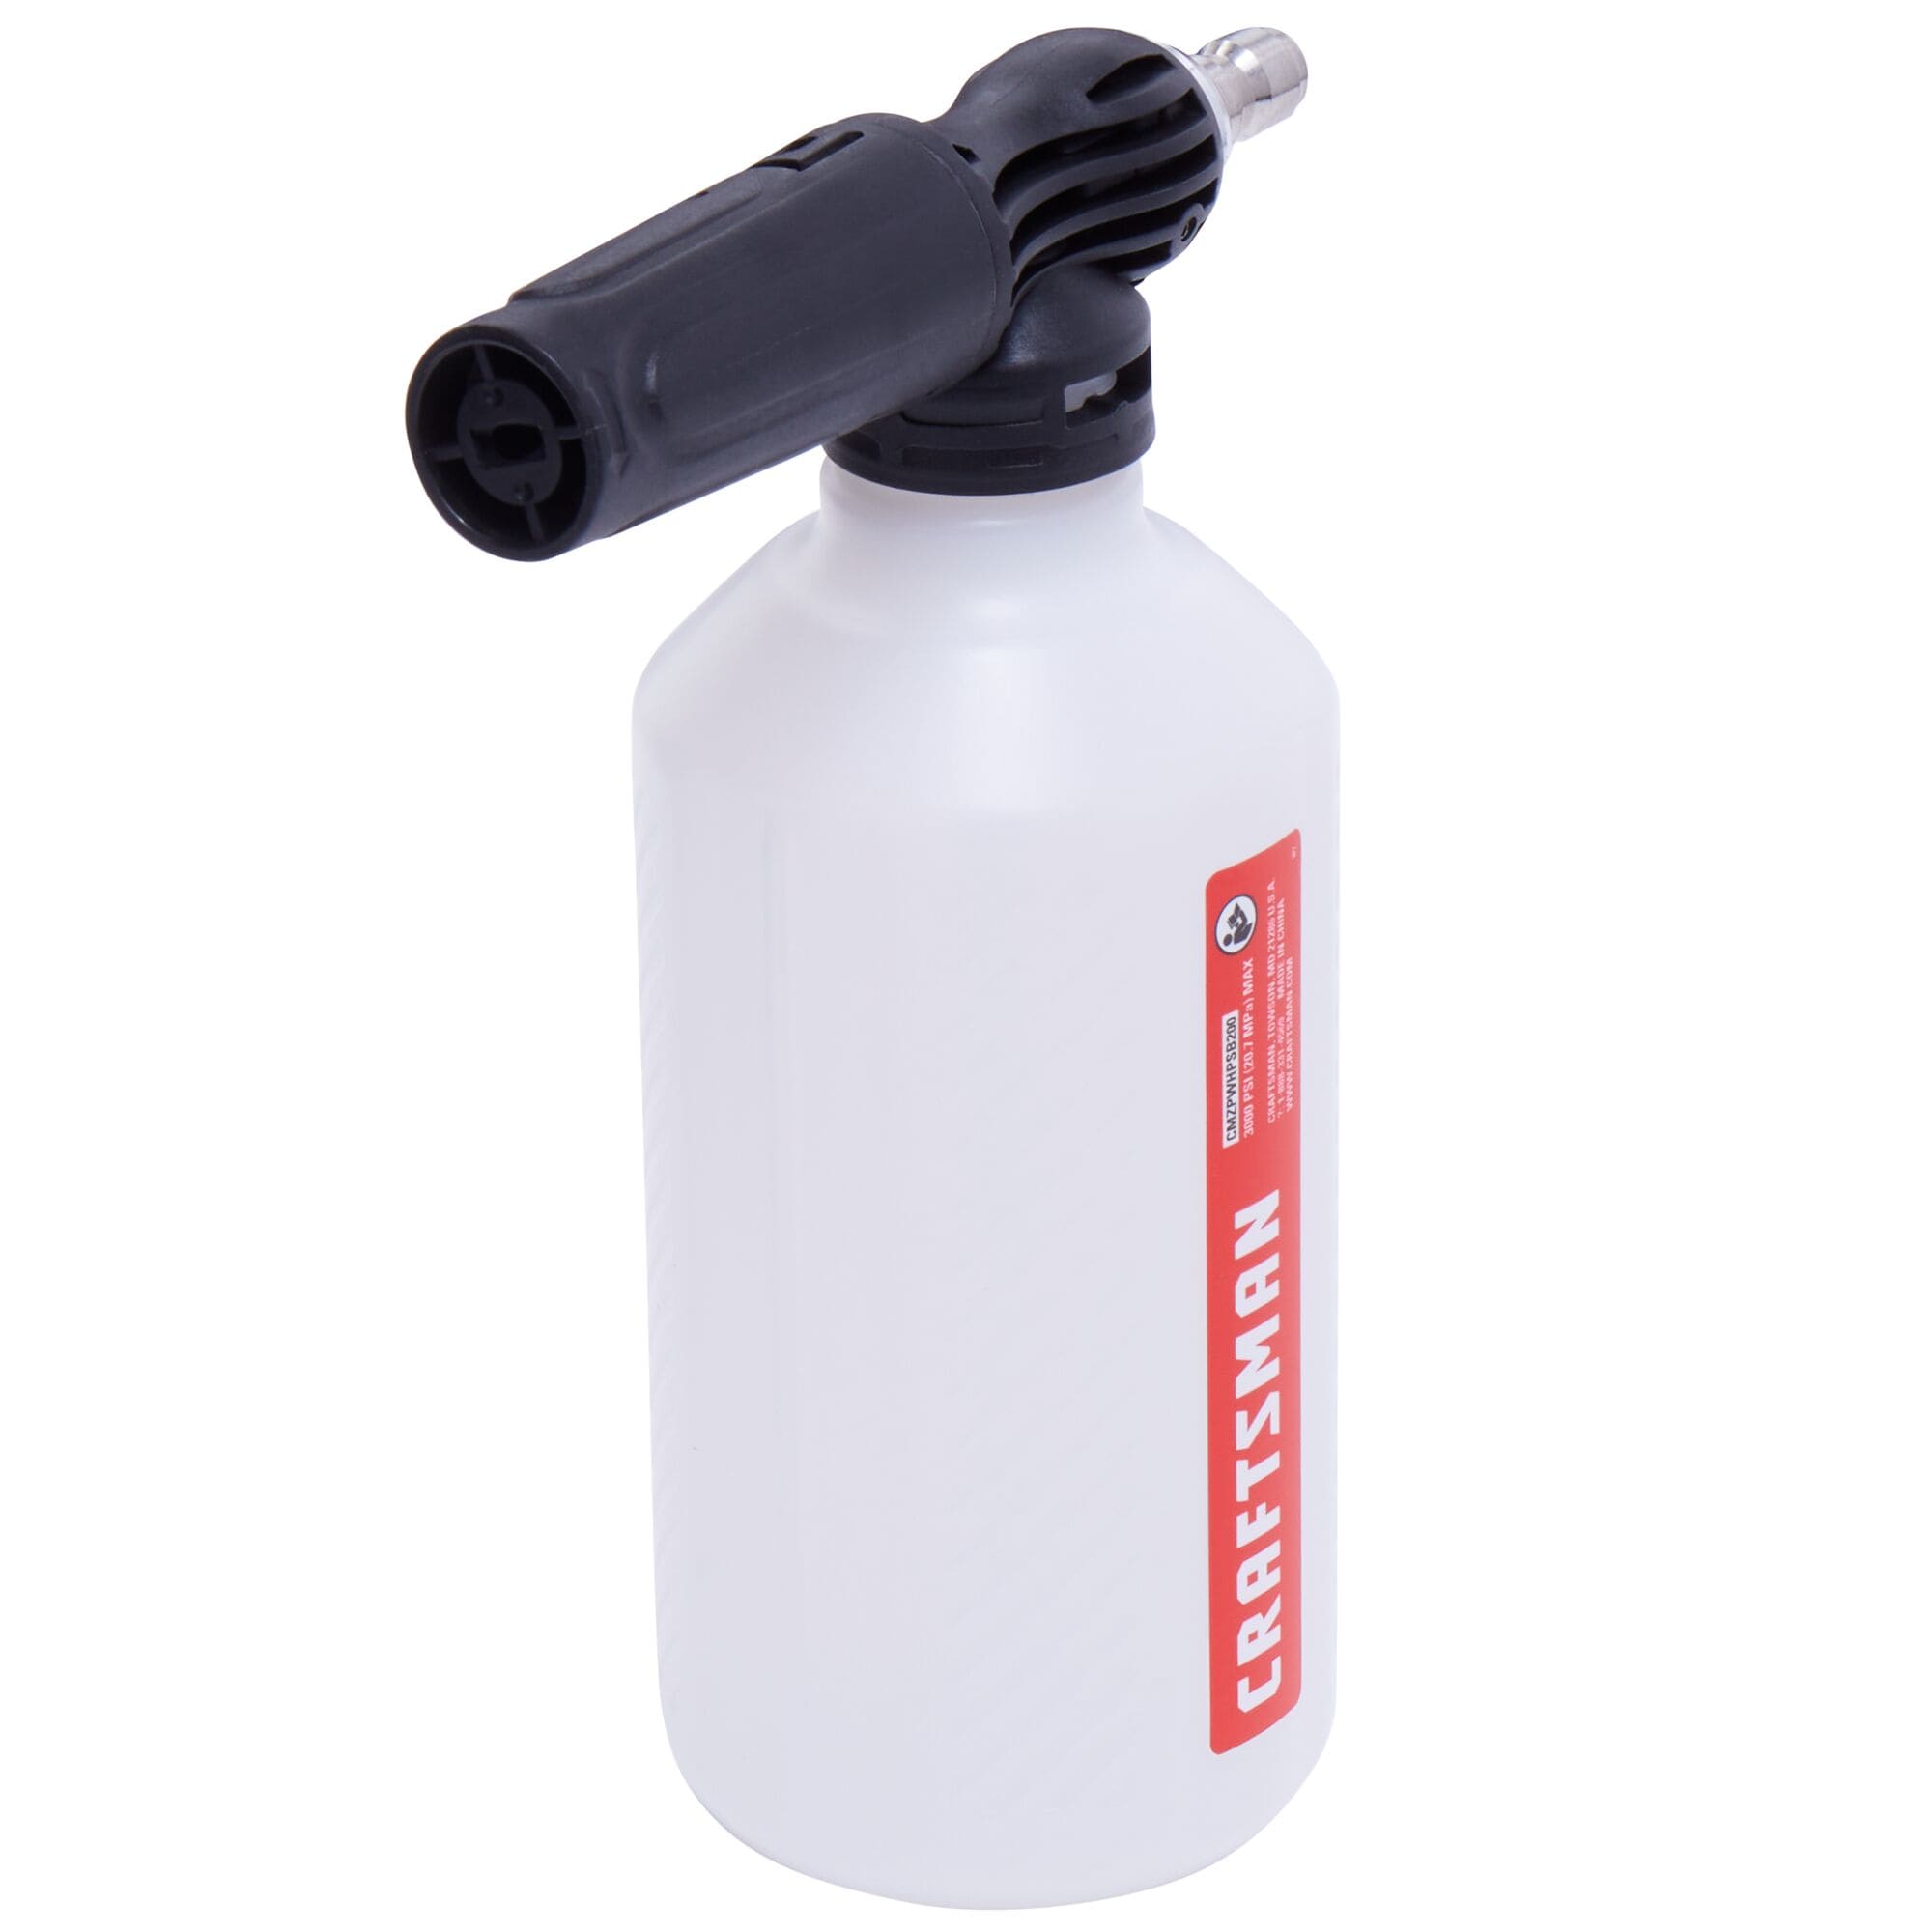 Electric Pressure Washer Soap Bottle, 250ml Soap Dispenser Attachment  Bottle for Portable Power Pressure Washers